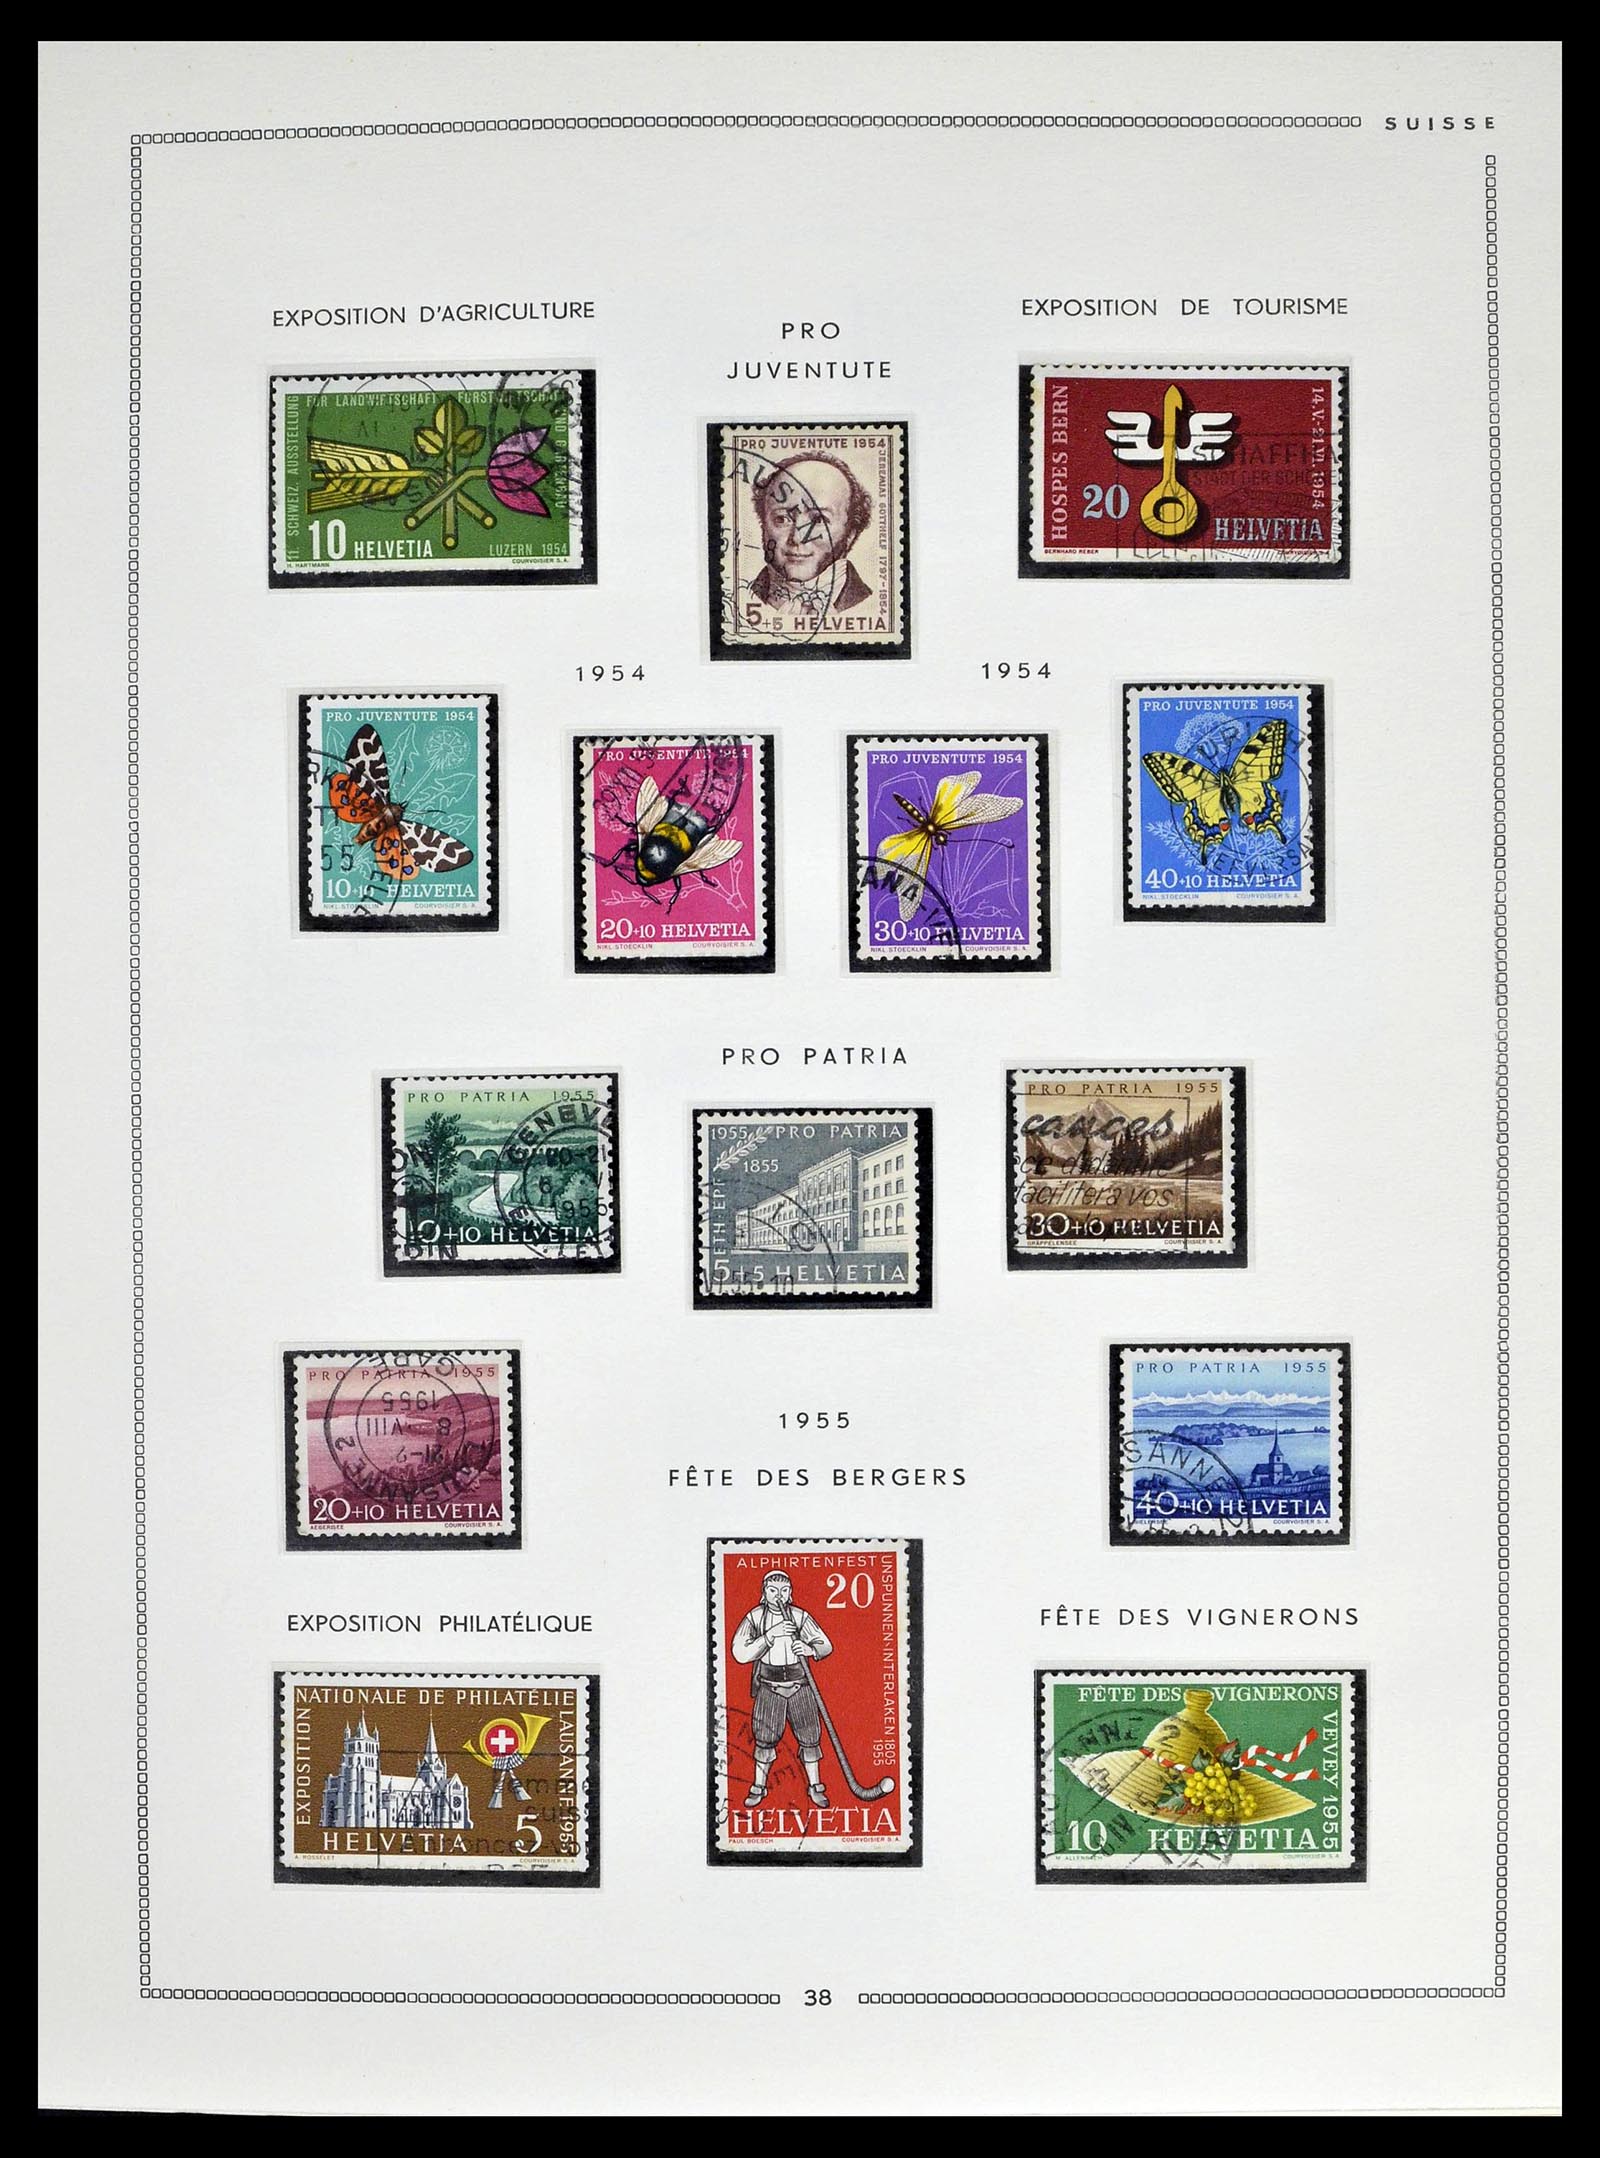 39094 0036 - Stamp collection 39094 Switzerland 1850-2005.